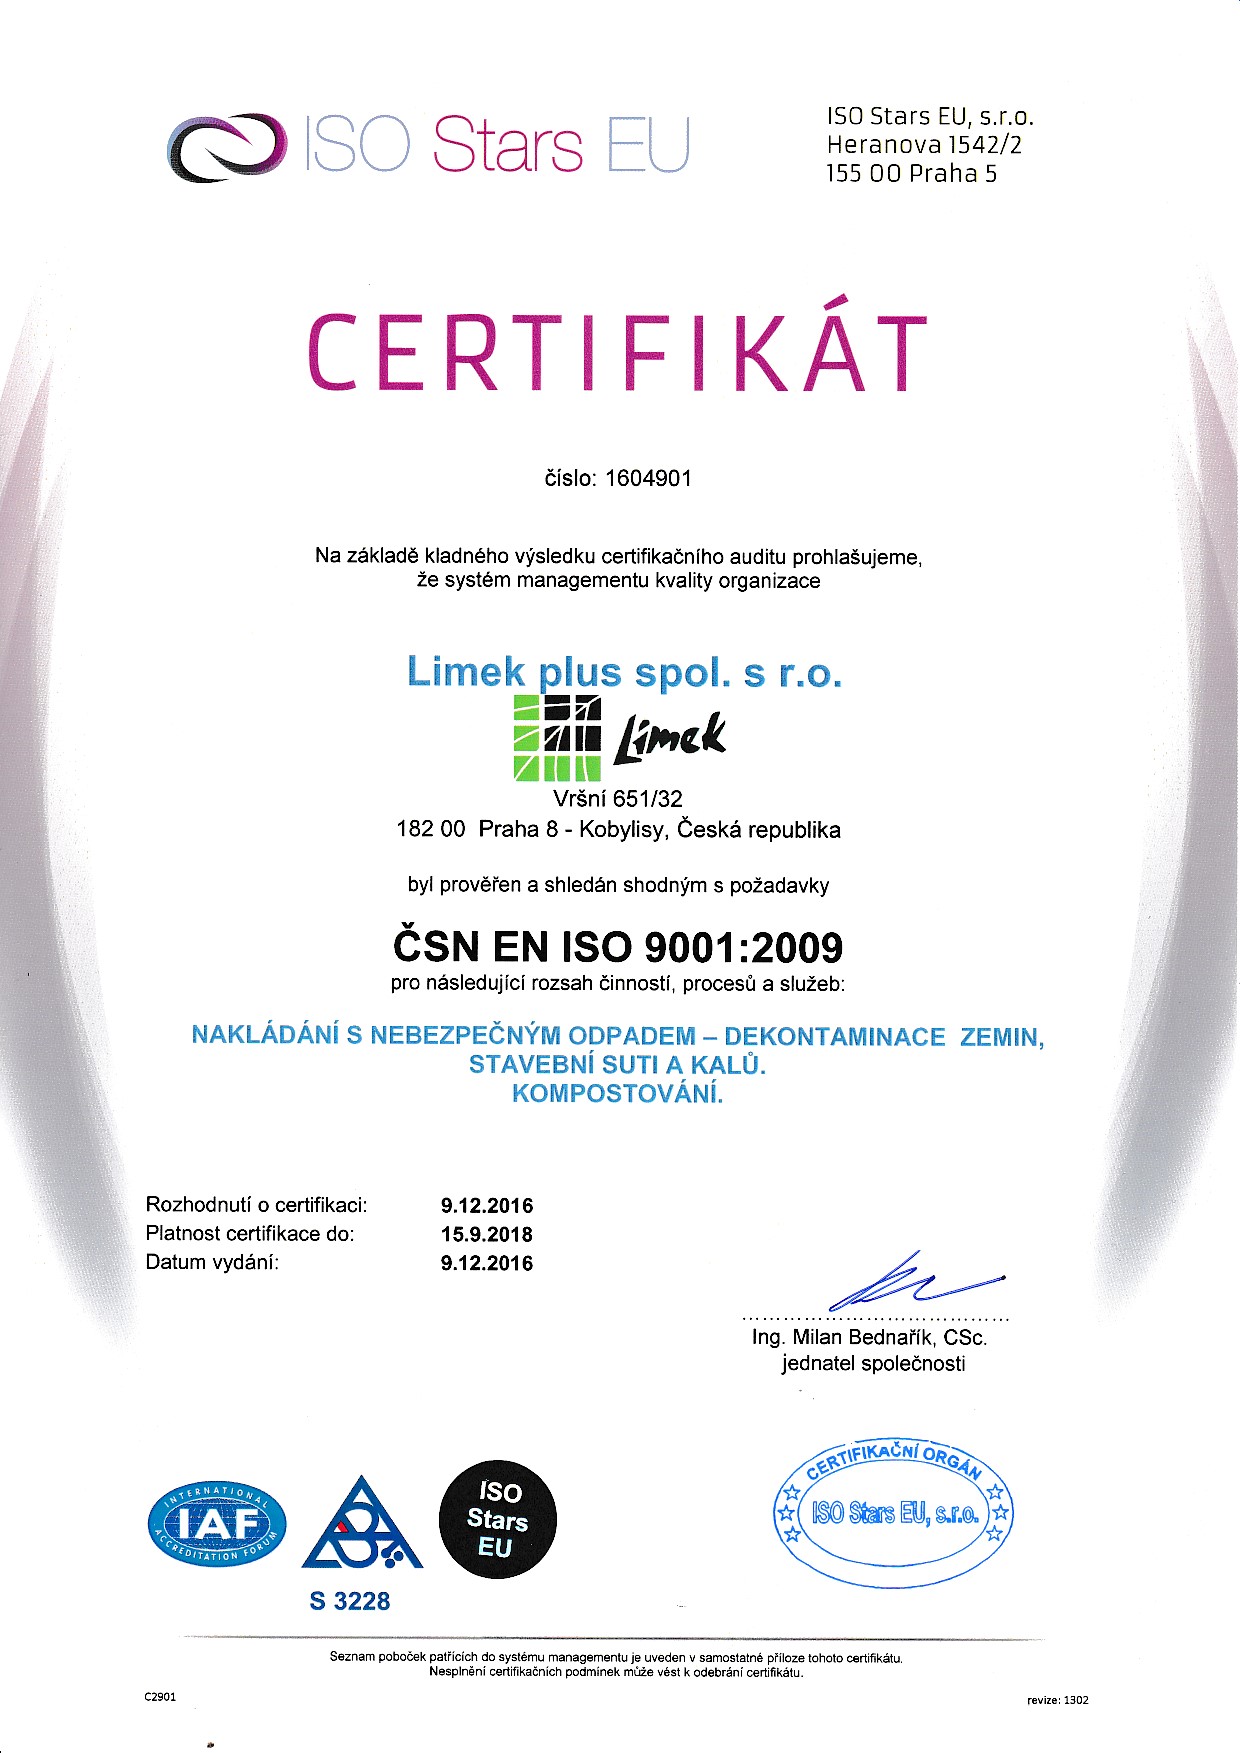 Certifikat ISO 9001:2009